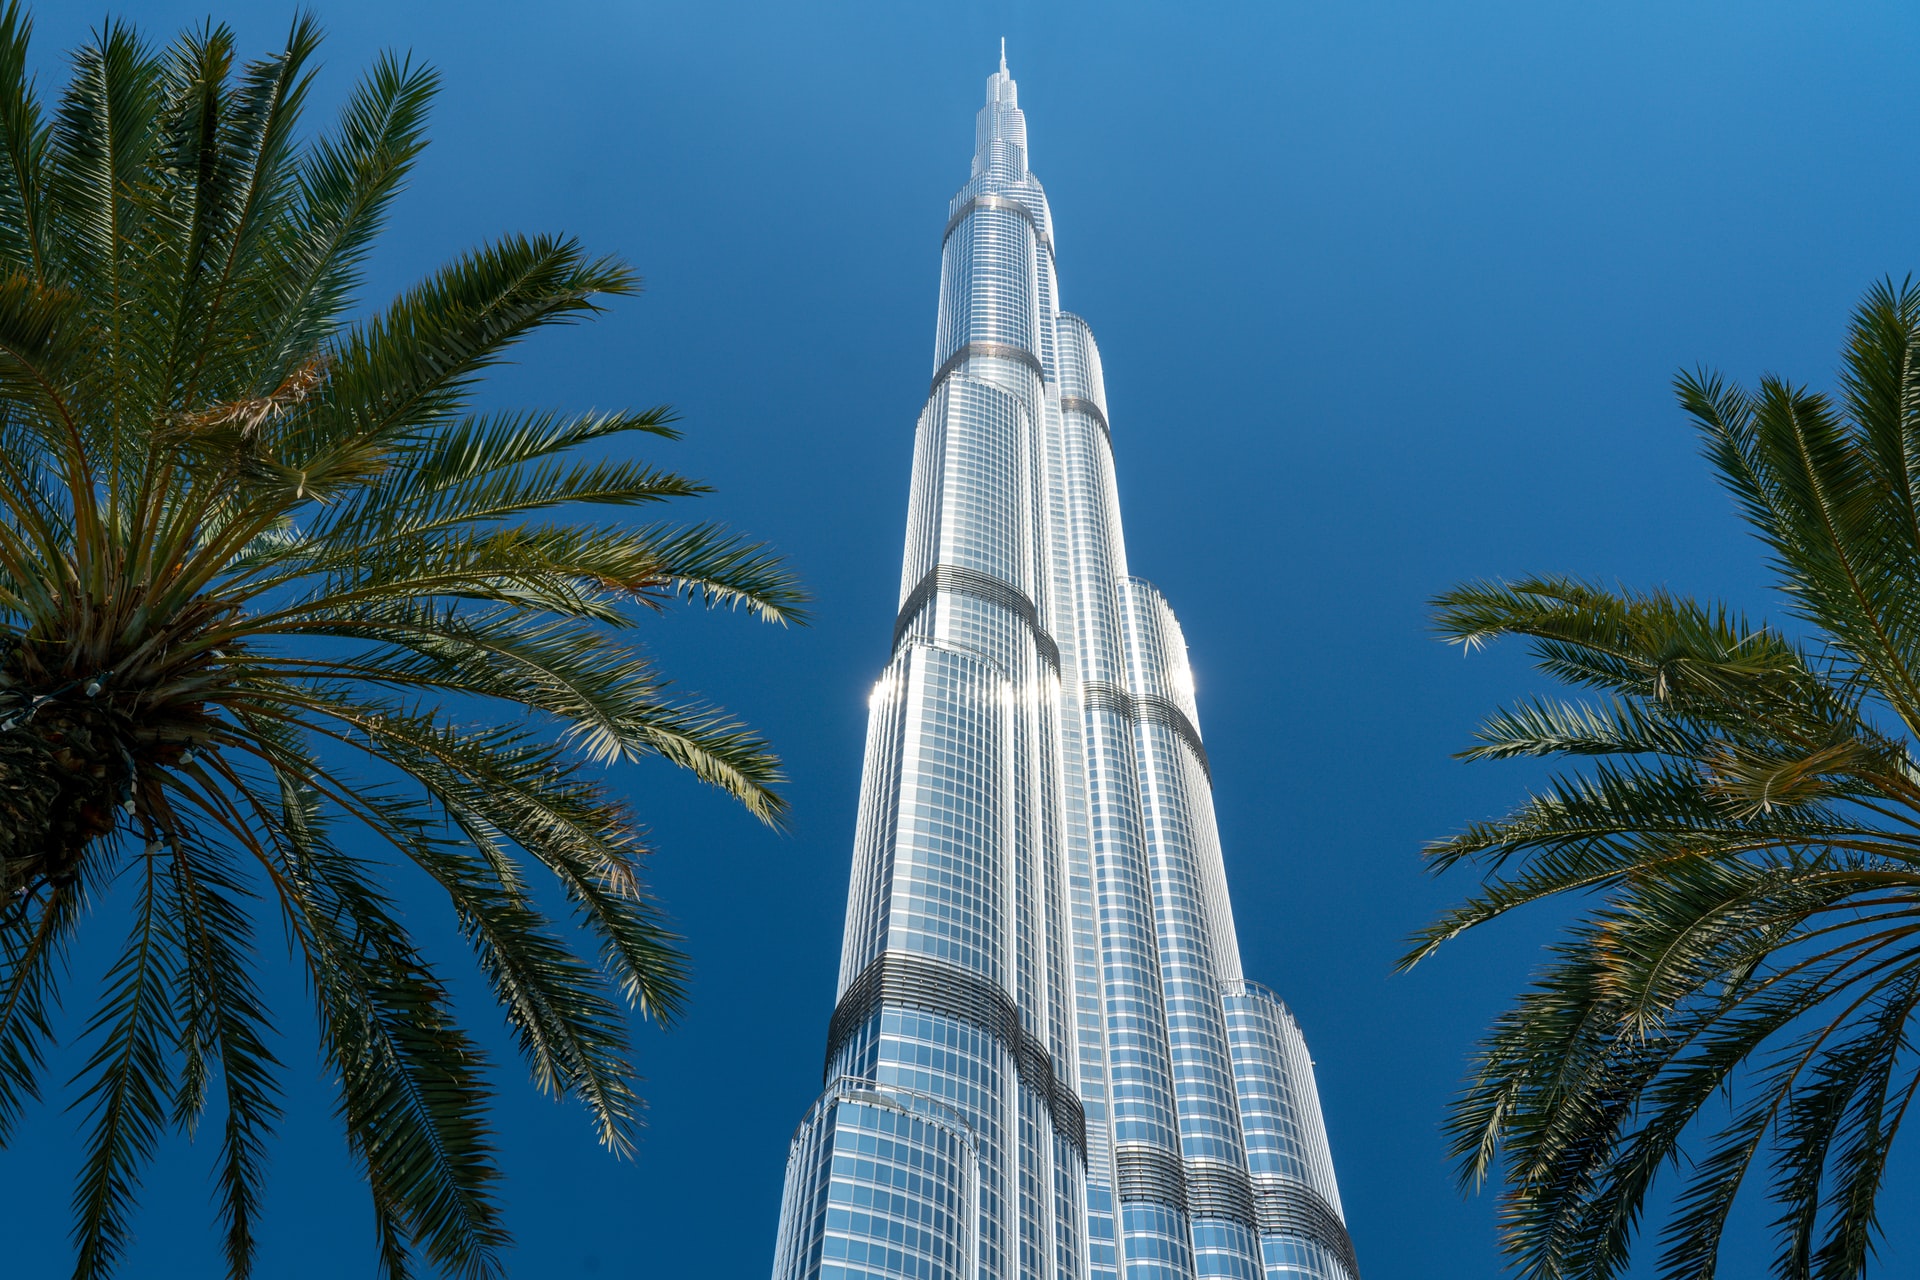 Dubai launches its own cryptocurrency - DubaiCoin